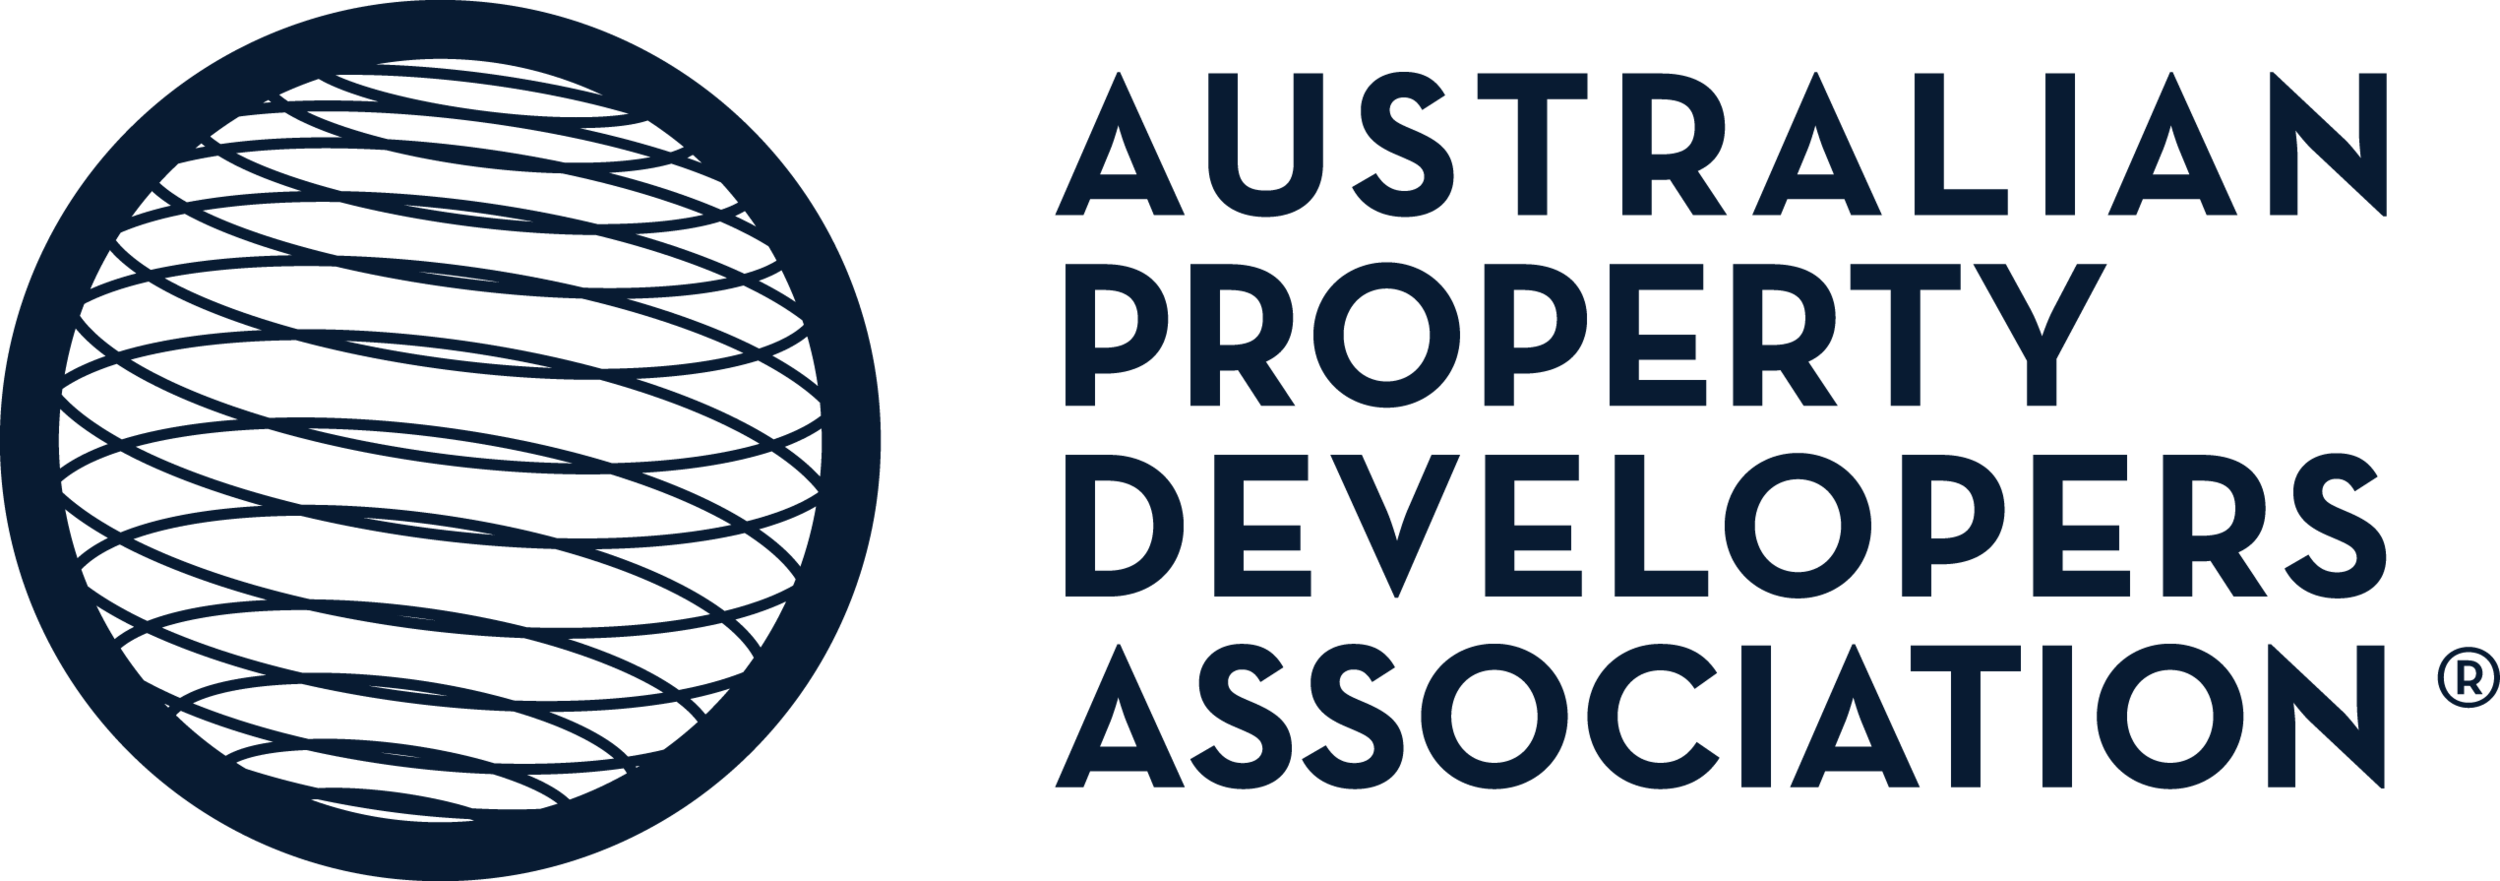 Australian Property Developers Association - The Voice of the Property Development Community